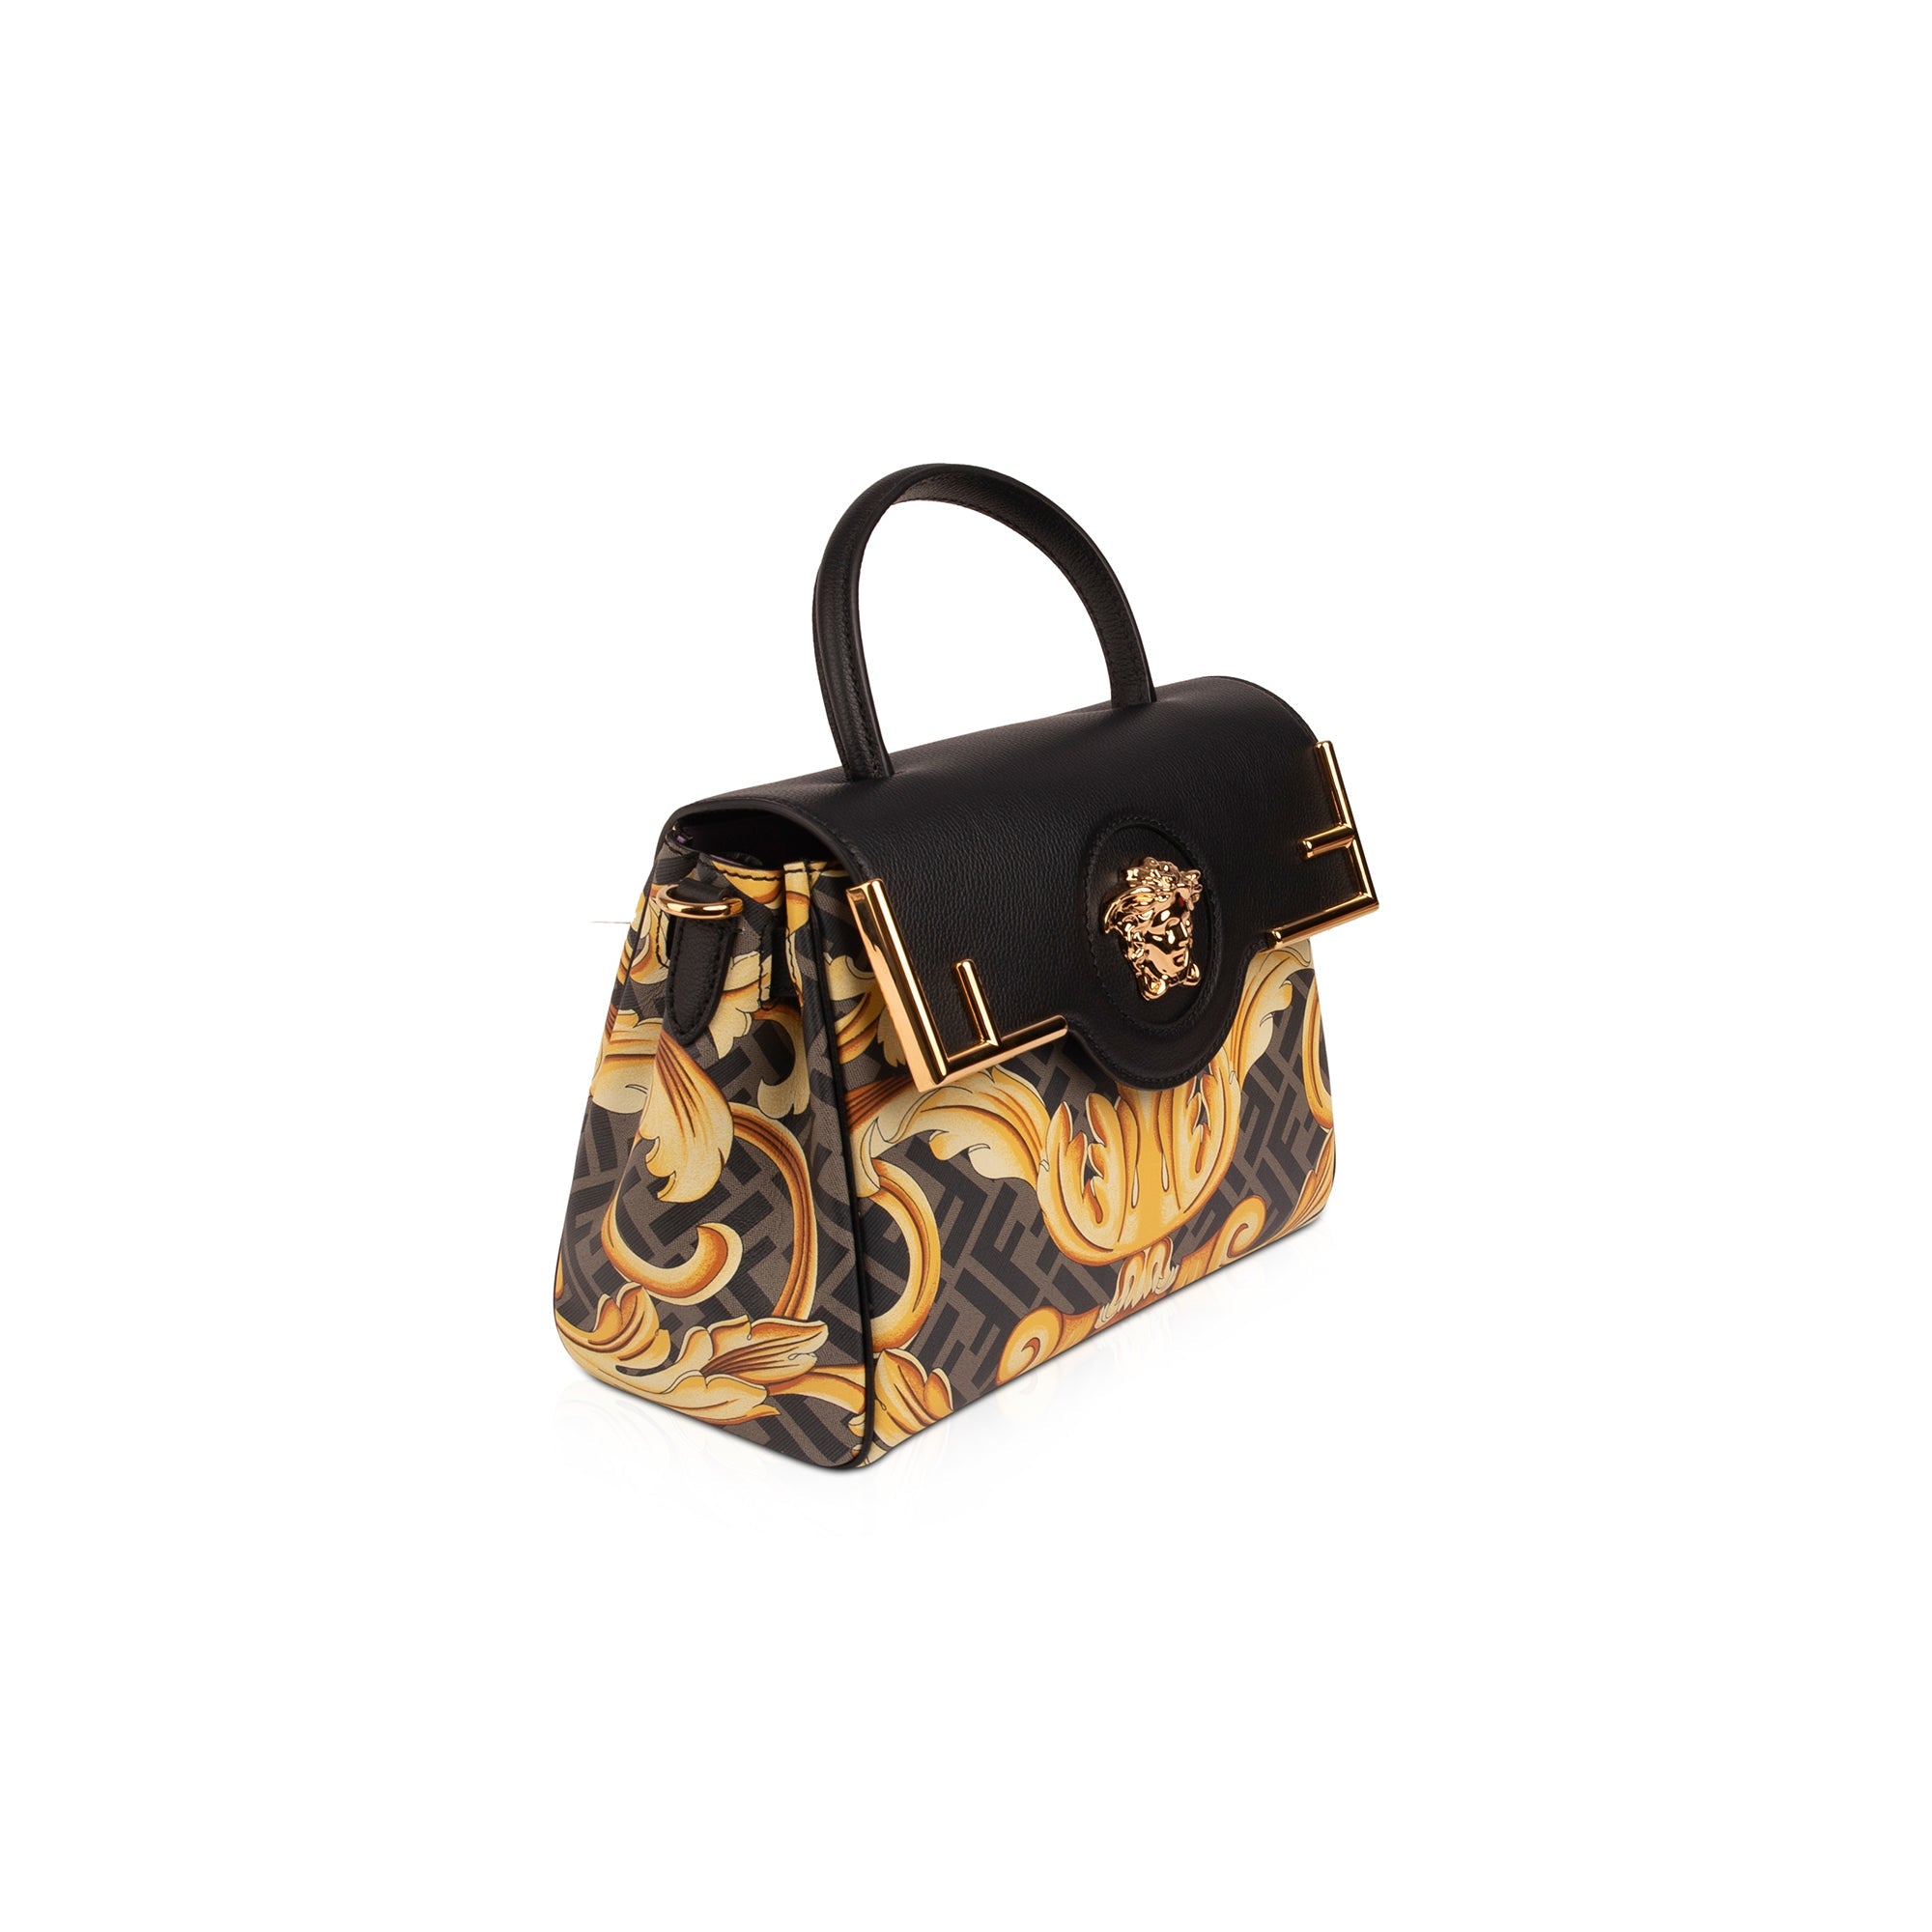 Fendi Fendace La Medusa Medium Handbag Gold Baroque Print in Canvas/Leather  with Gold-tone - CN